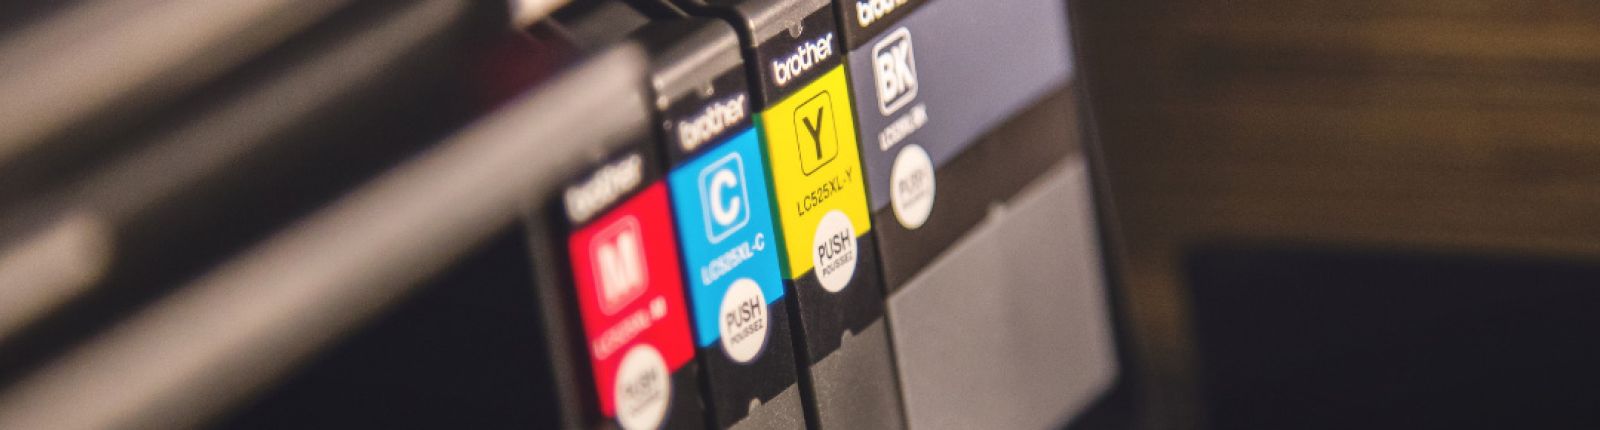 Printer cartridge recycling image